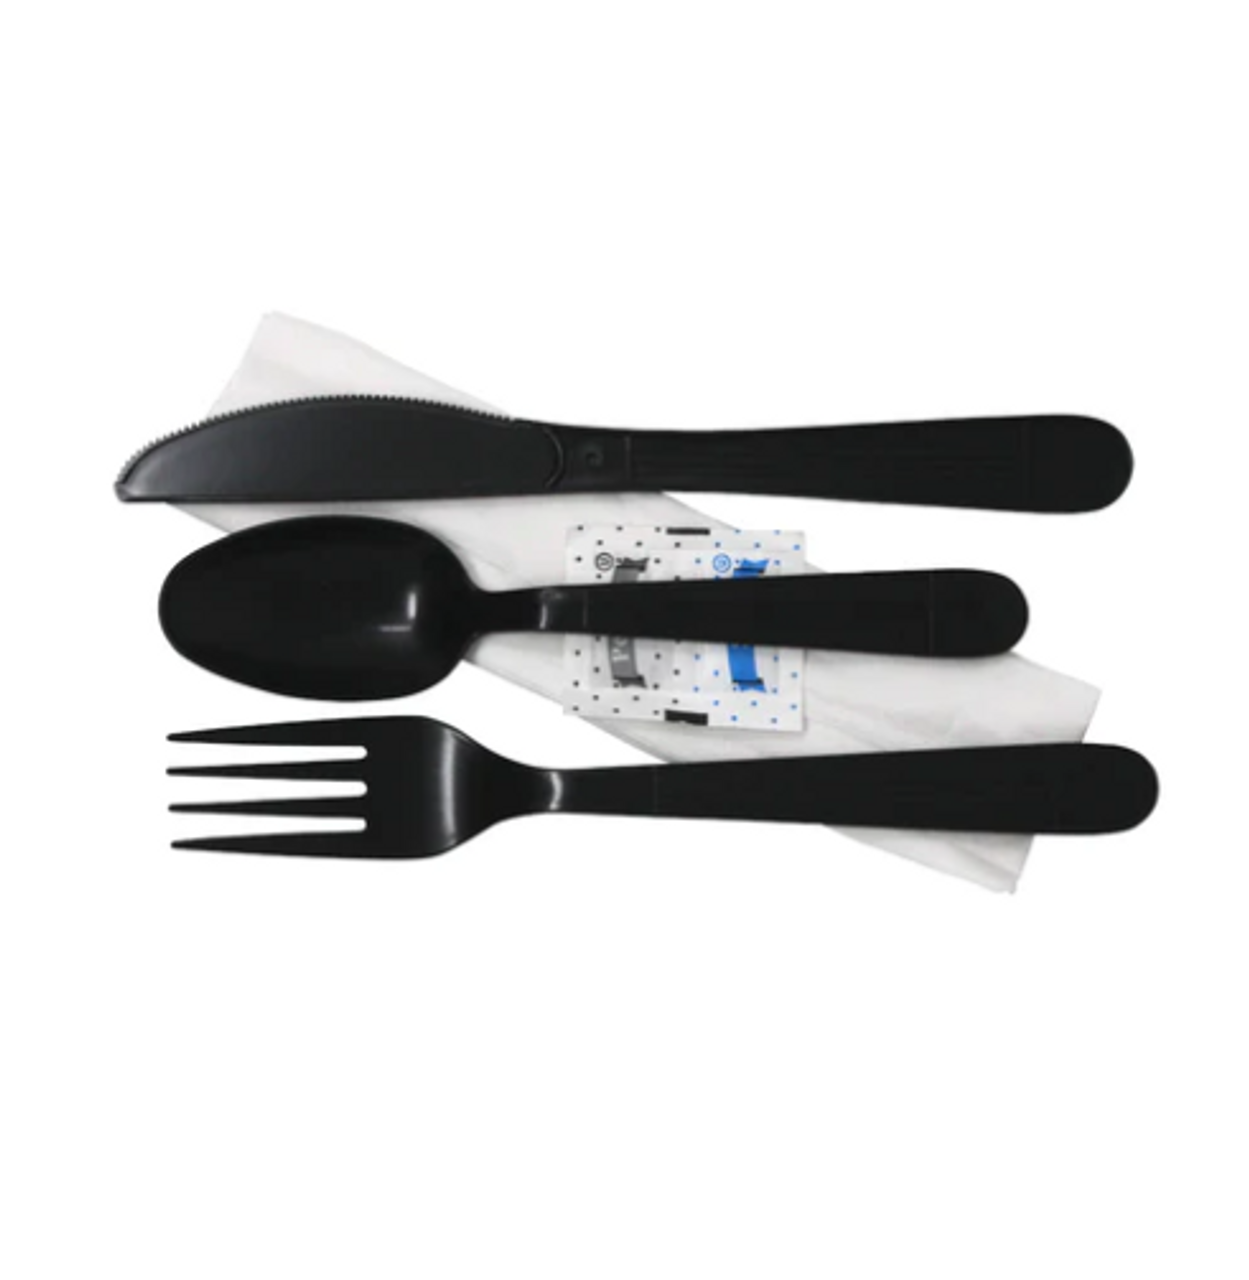 16Pcs Black/Clear Plastic Utensils Heavy Duty Plastic Cutlery Set